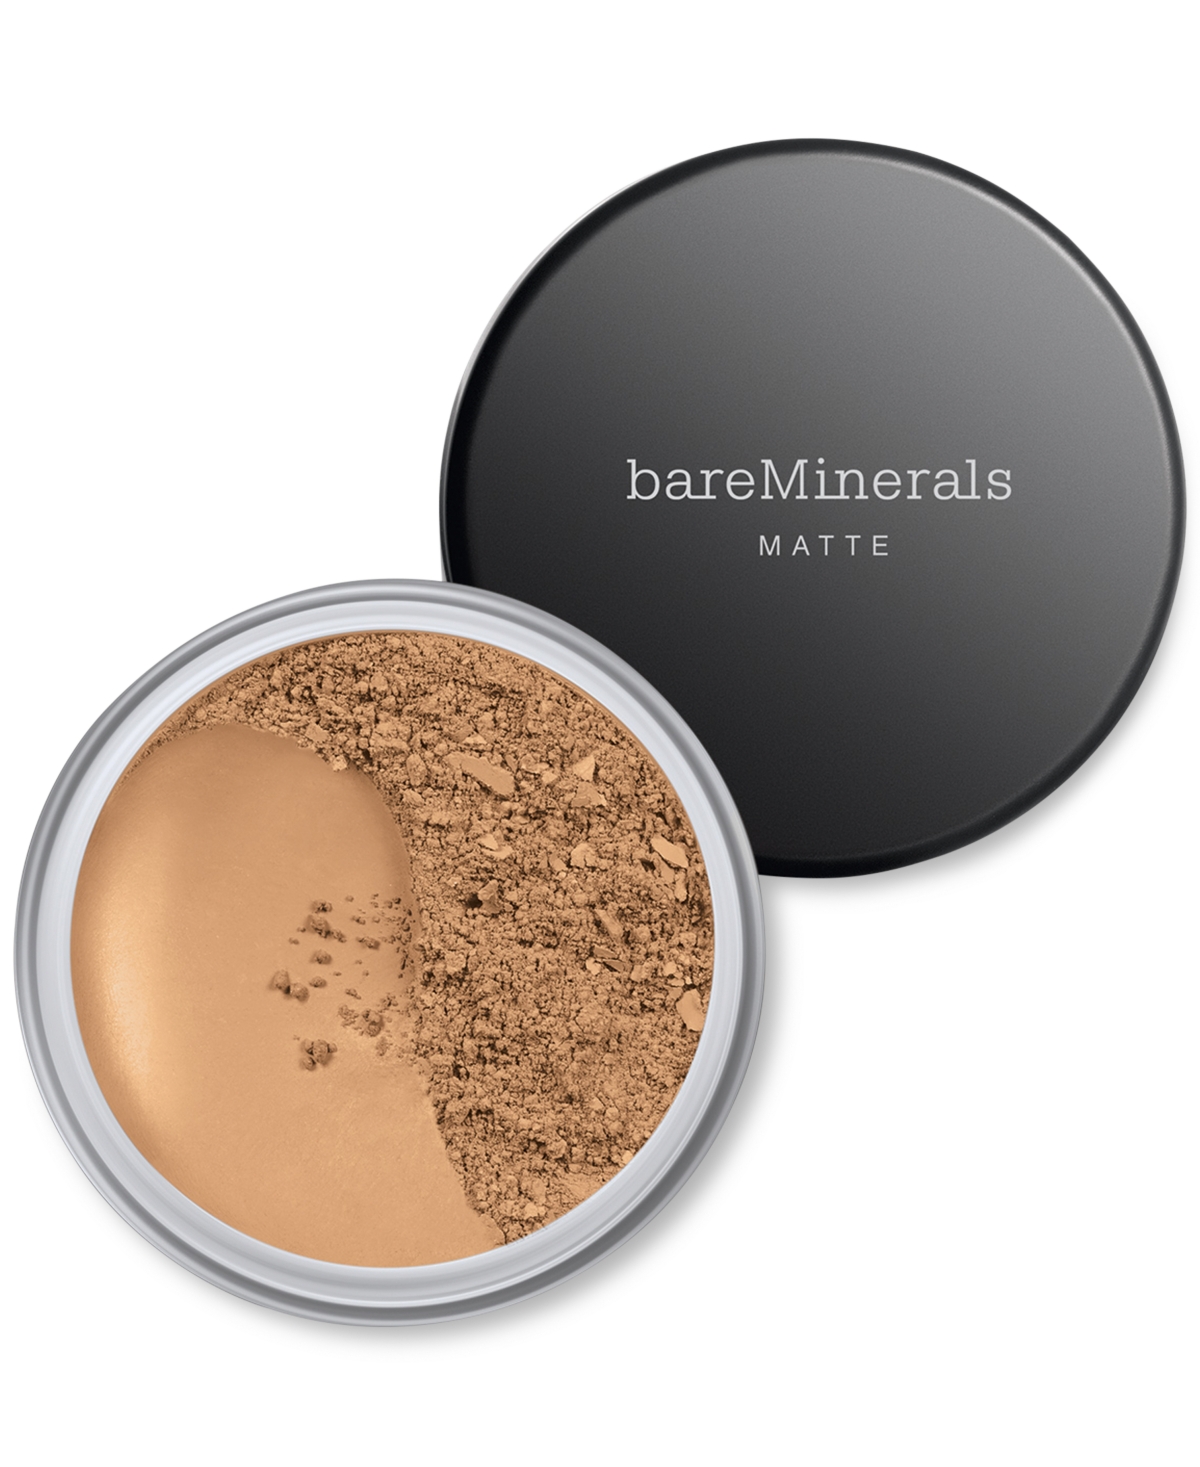 Bareminerals Matte Loose Powder Foundation Spf 15 In Golden Tan  - For Medium To Tan Skin Wit